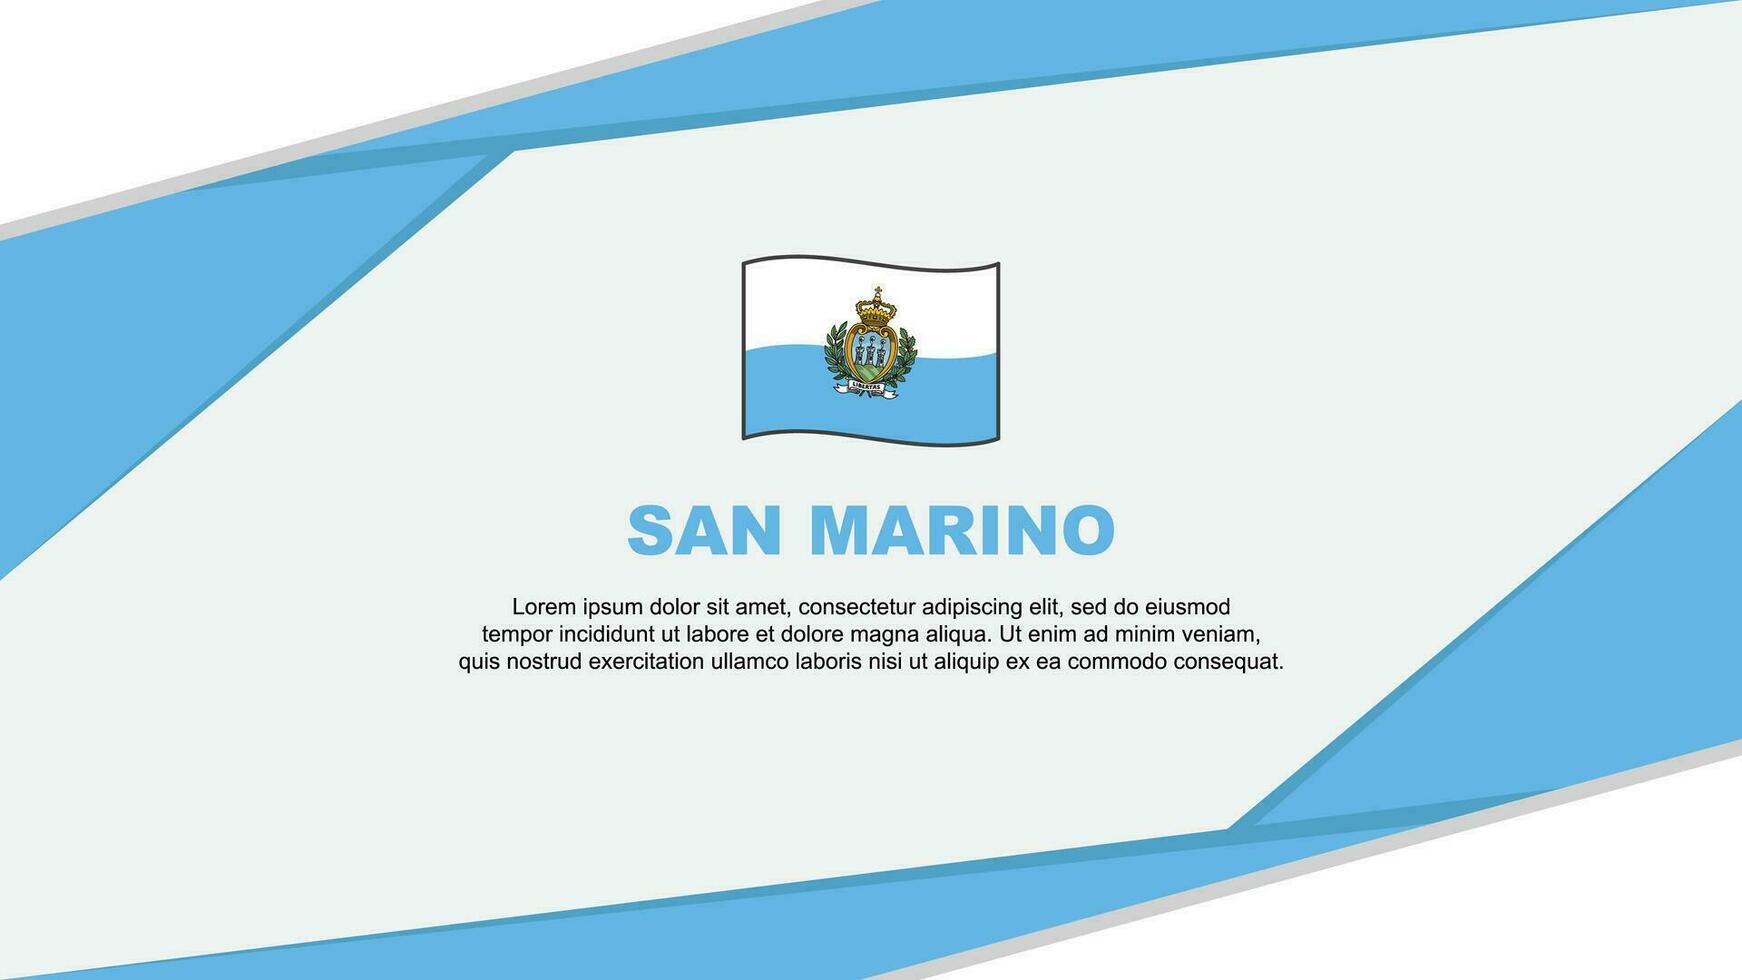 San Marino Flag Abstract Background Design Template. San Marino Independence Day Banner Cartoon Vector Illustration. San Marino